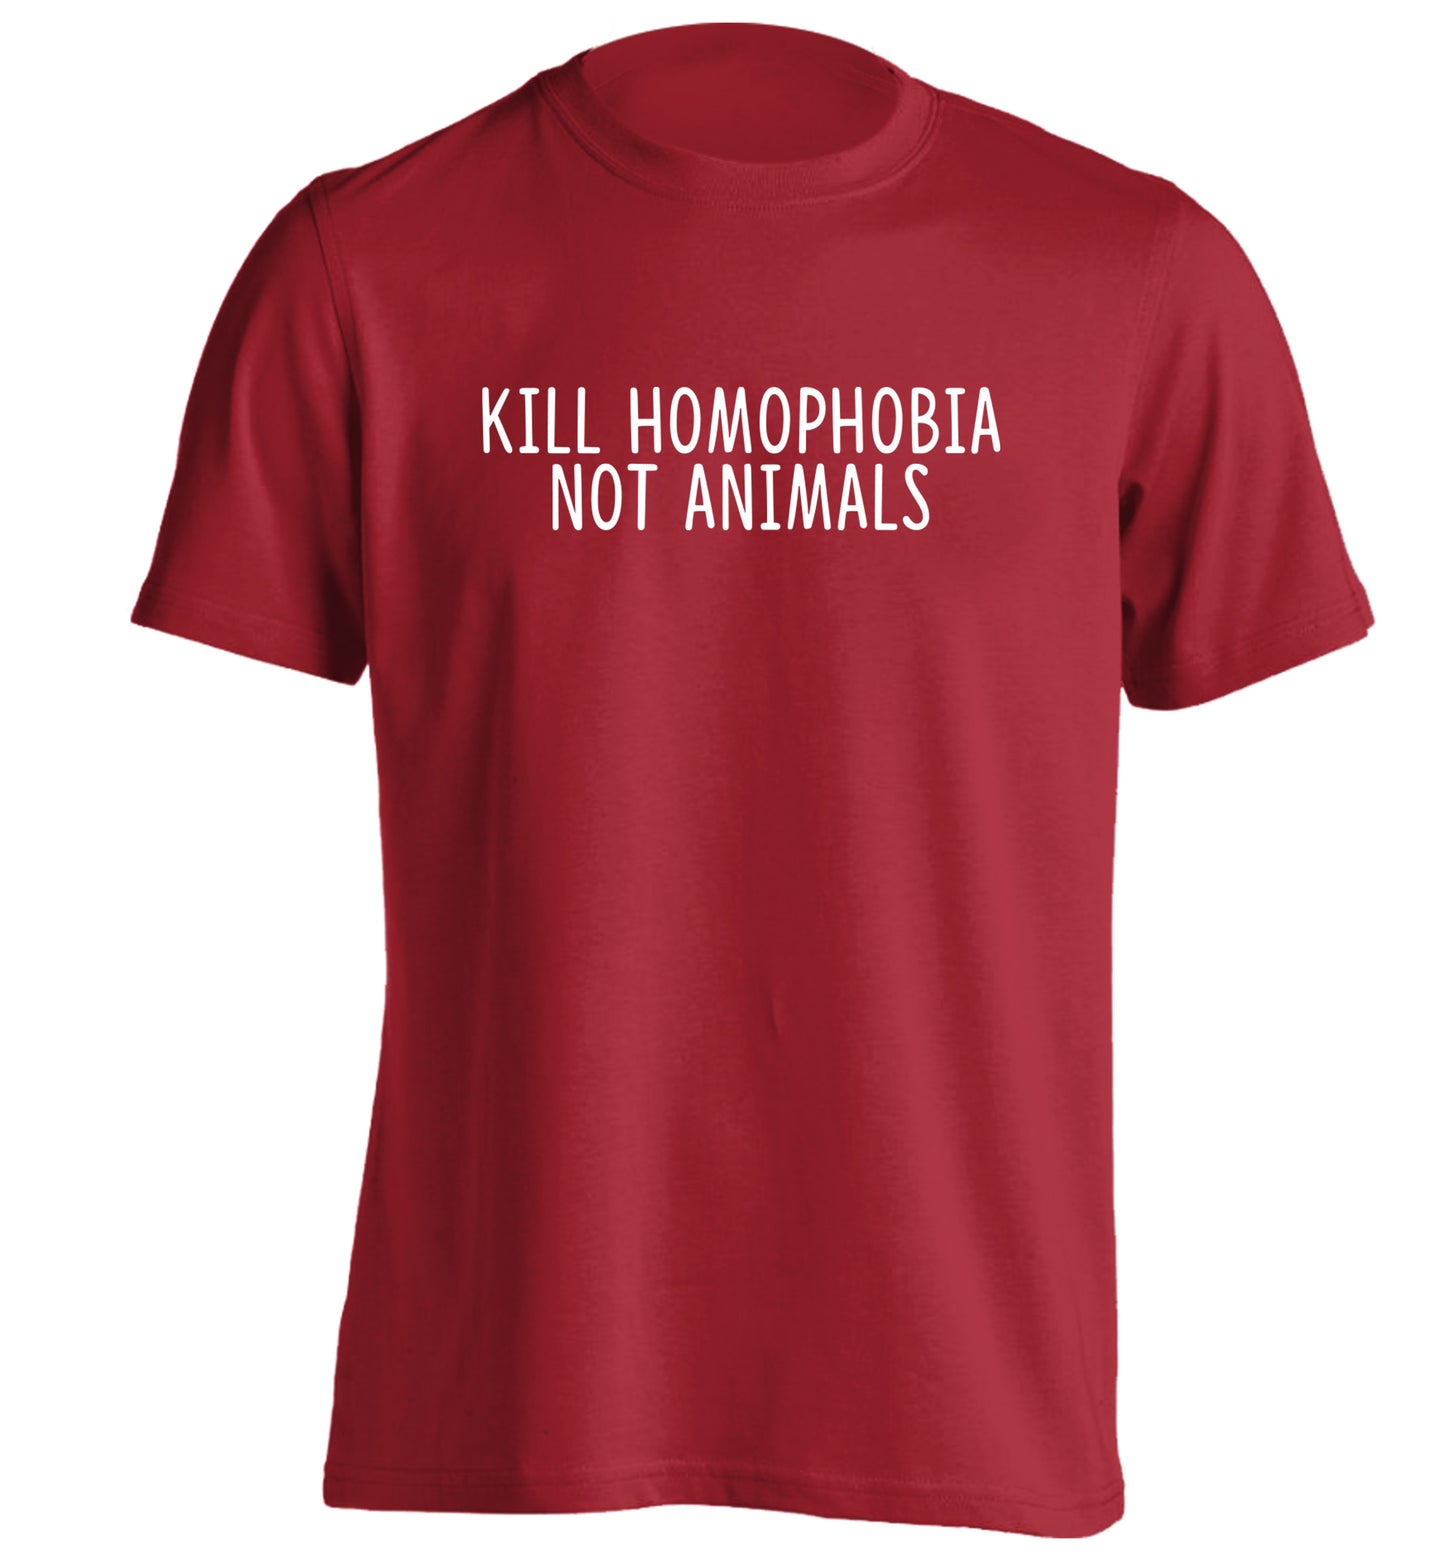 Kill Homophobia Not Animals adults unisex red Tshirt 2XL